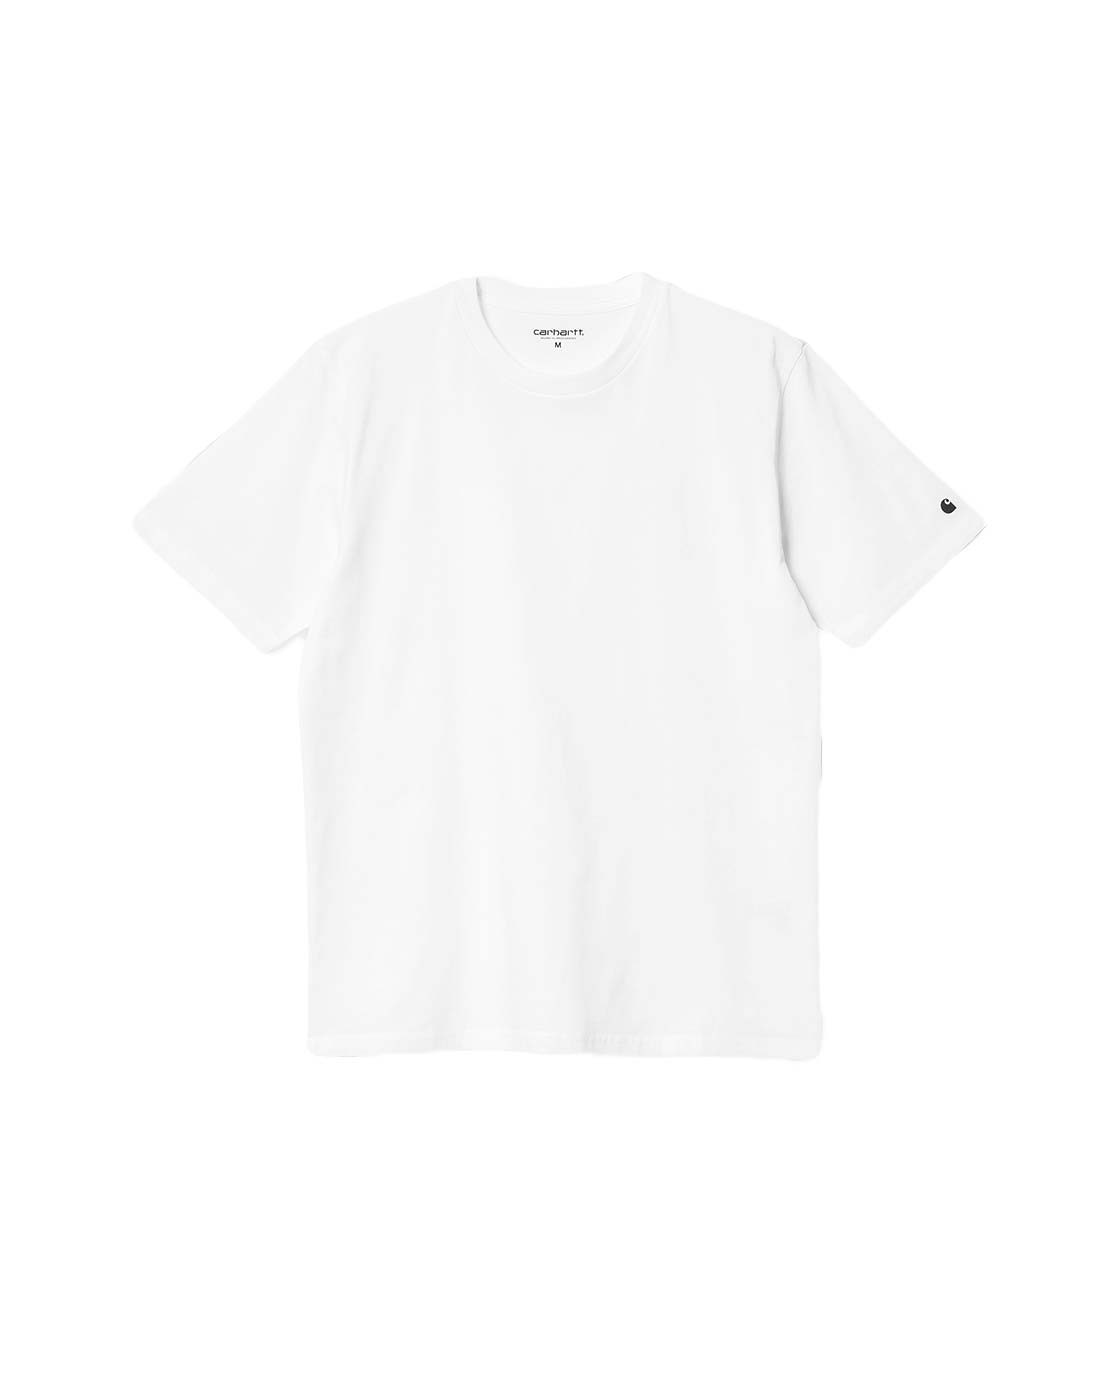 S/s Base T-shirt